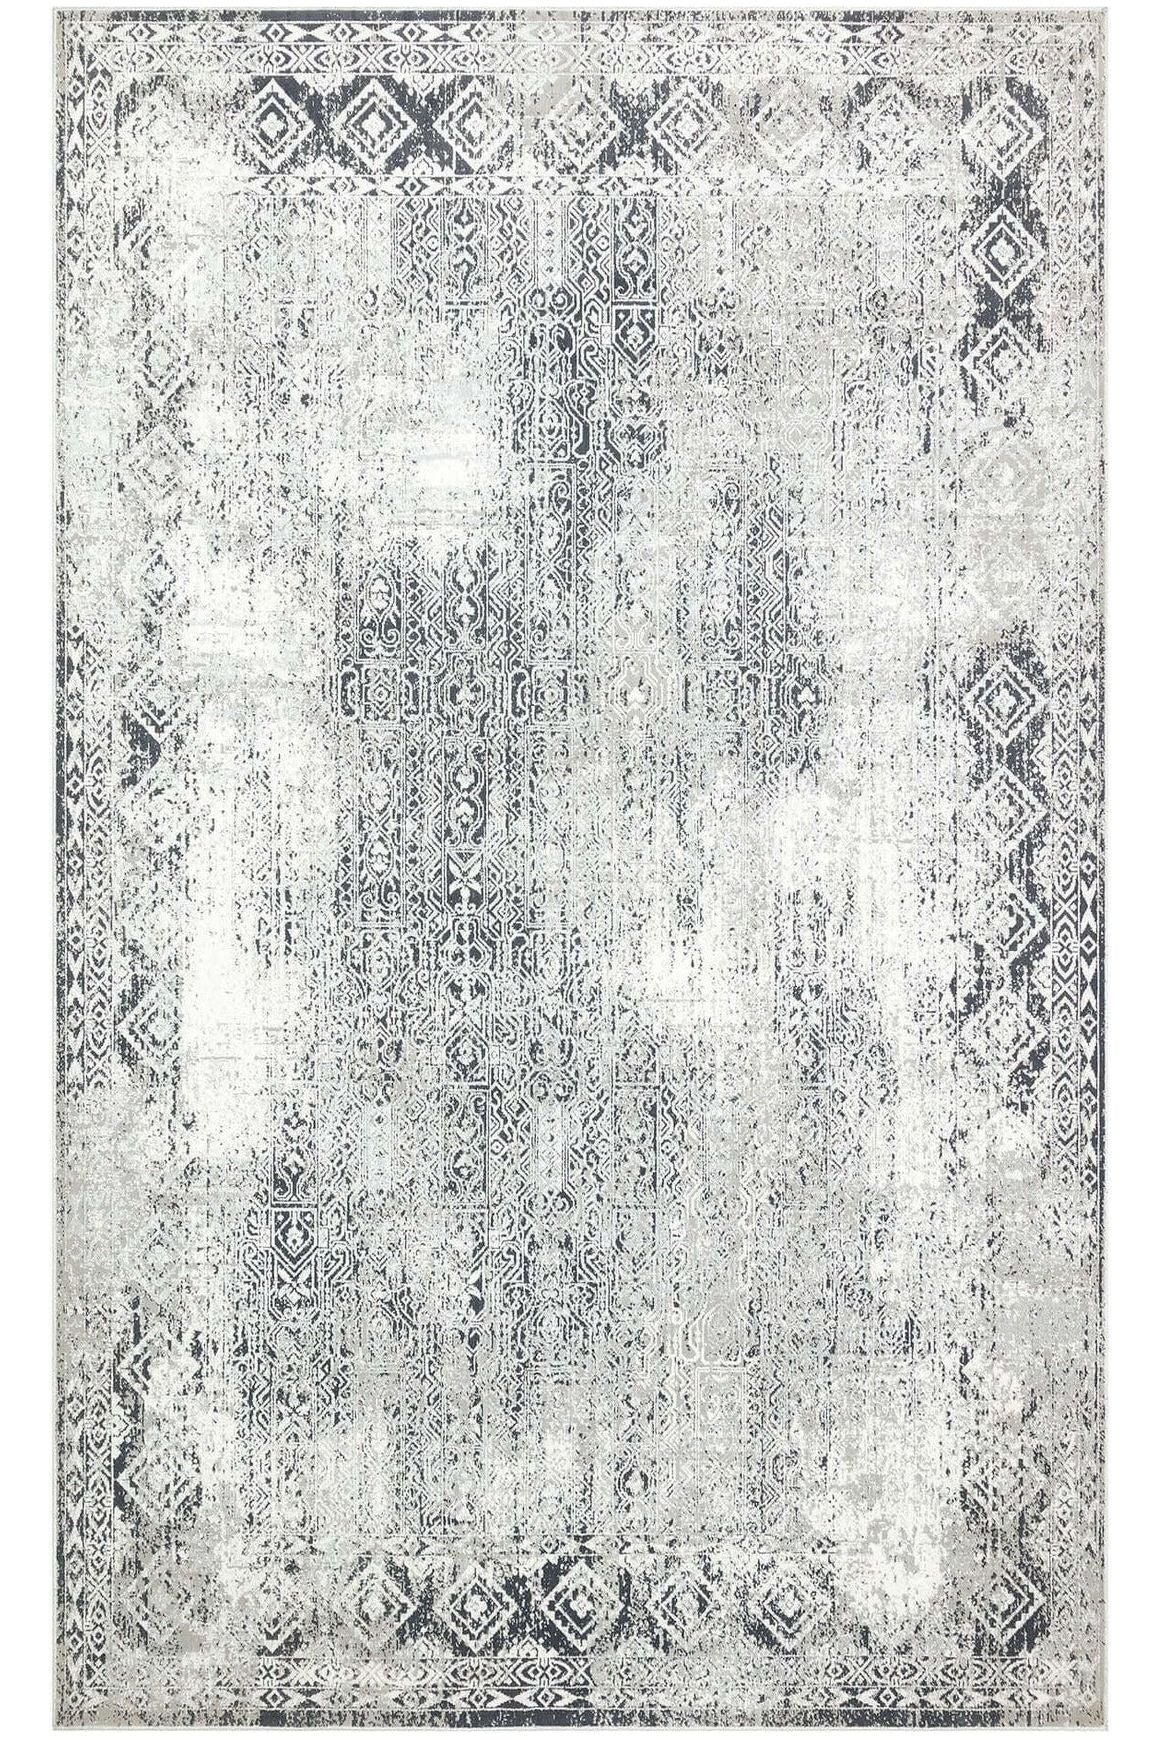 #Turkish_Carpets_Rugs# #Modern_Carpets# #Abrash_Carpets#Vr 08 Grey Black Xw